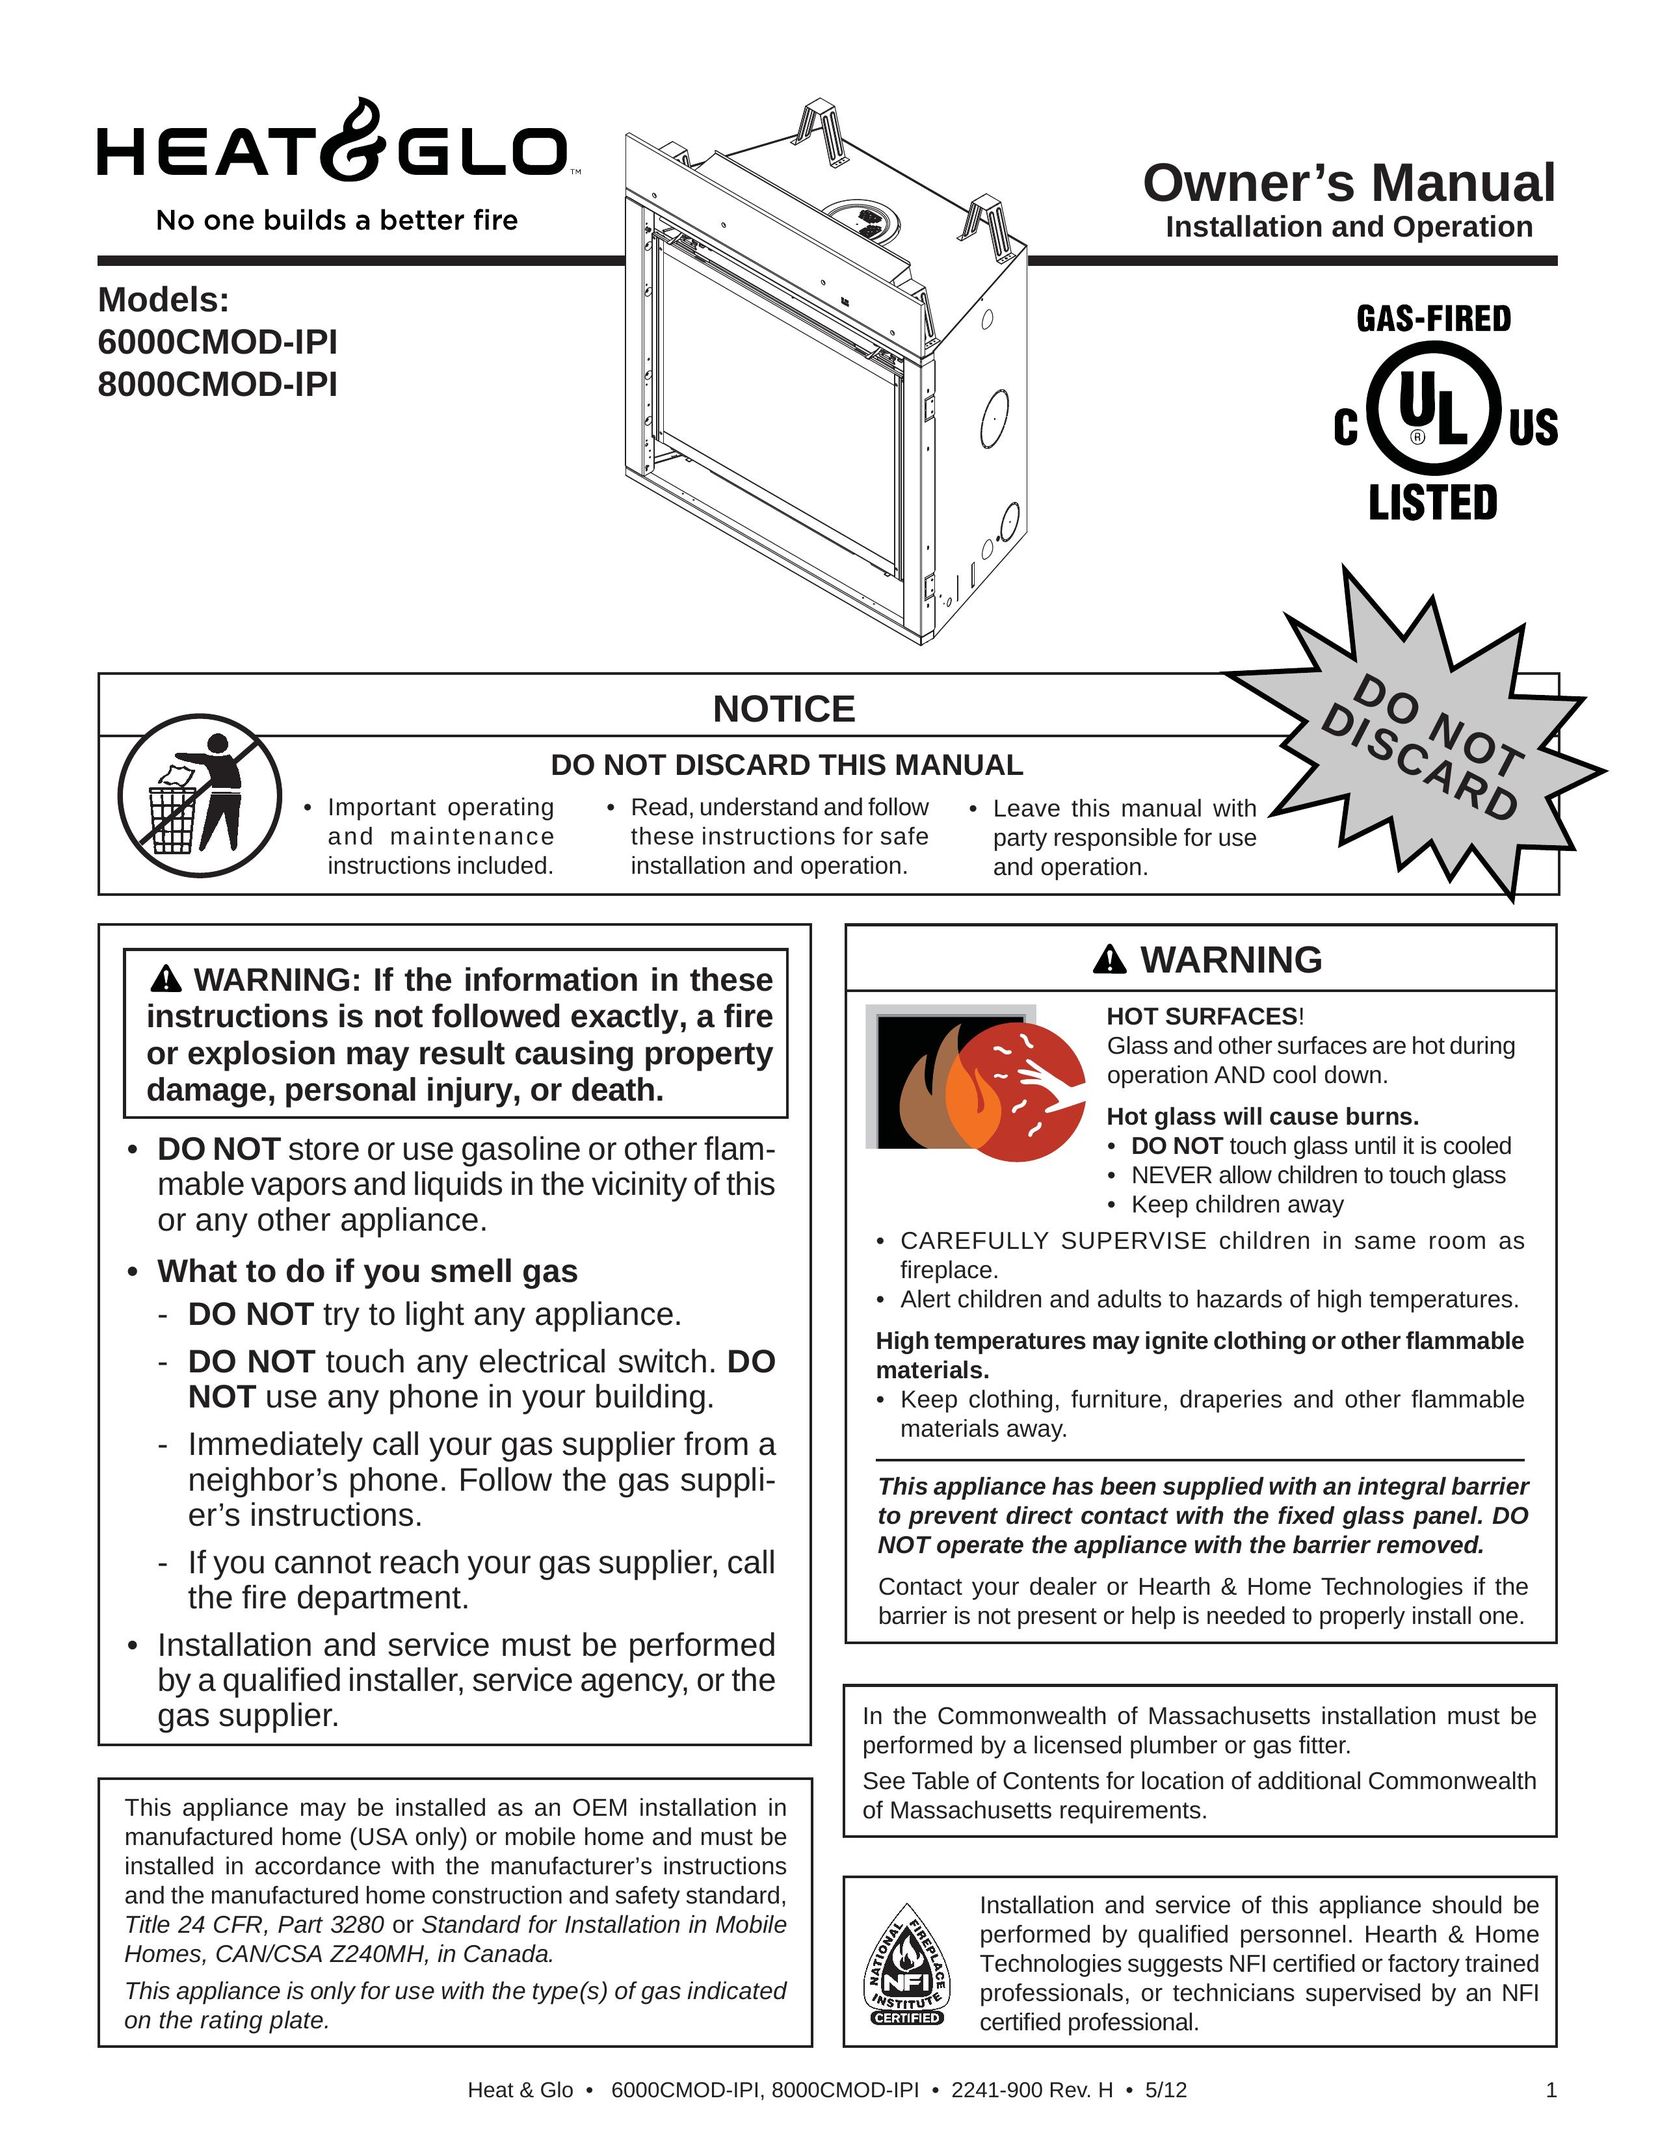 Heat & Glo LifeStyle 8000CMOD-IPI Indoor Fireplace User Manual